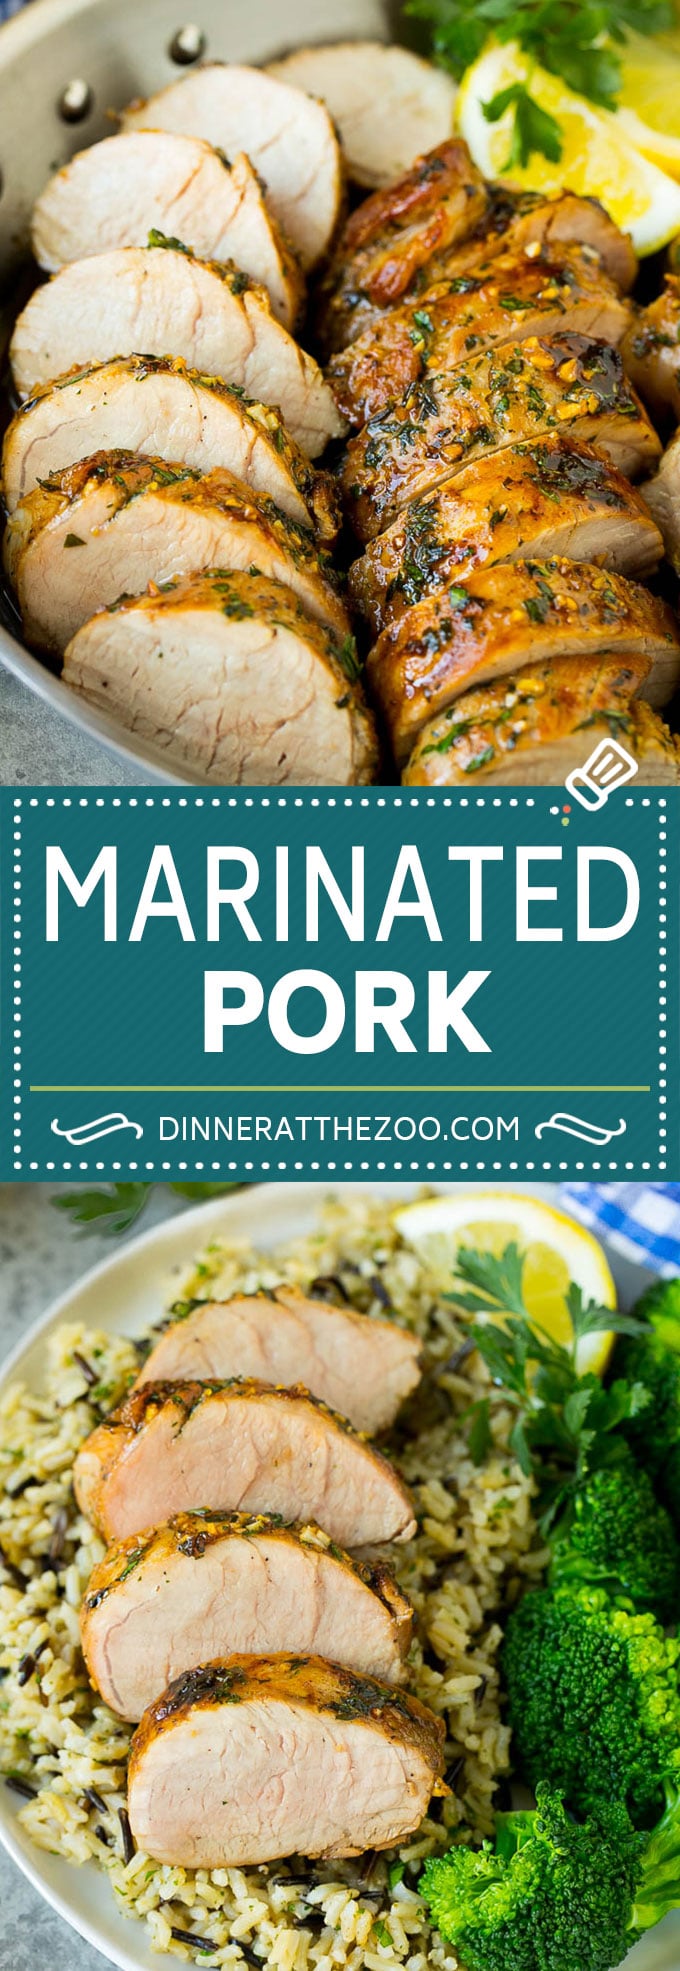 Marinated Pork Tenderloin Recipe | Pork Tenderloin Marinade | Pork Marinade #pork #porktenderloin #marinade #dinner #grilling #dinneratthezoo